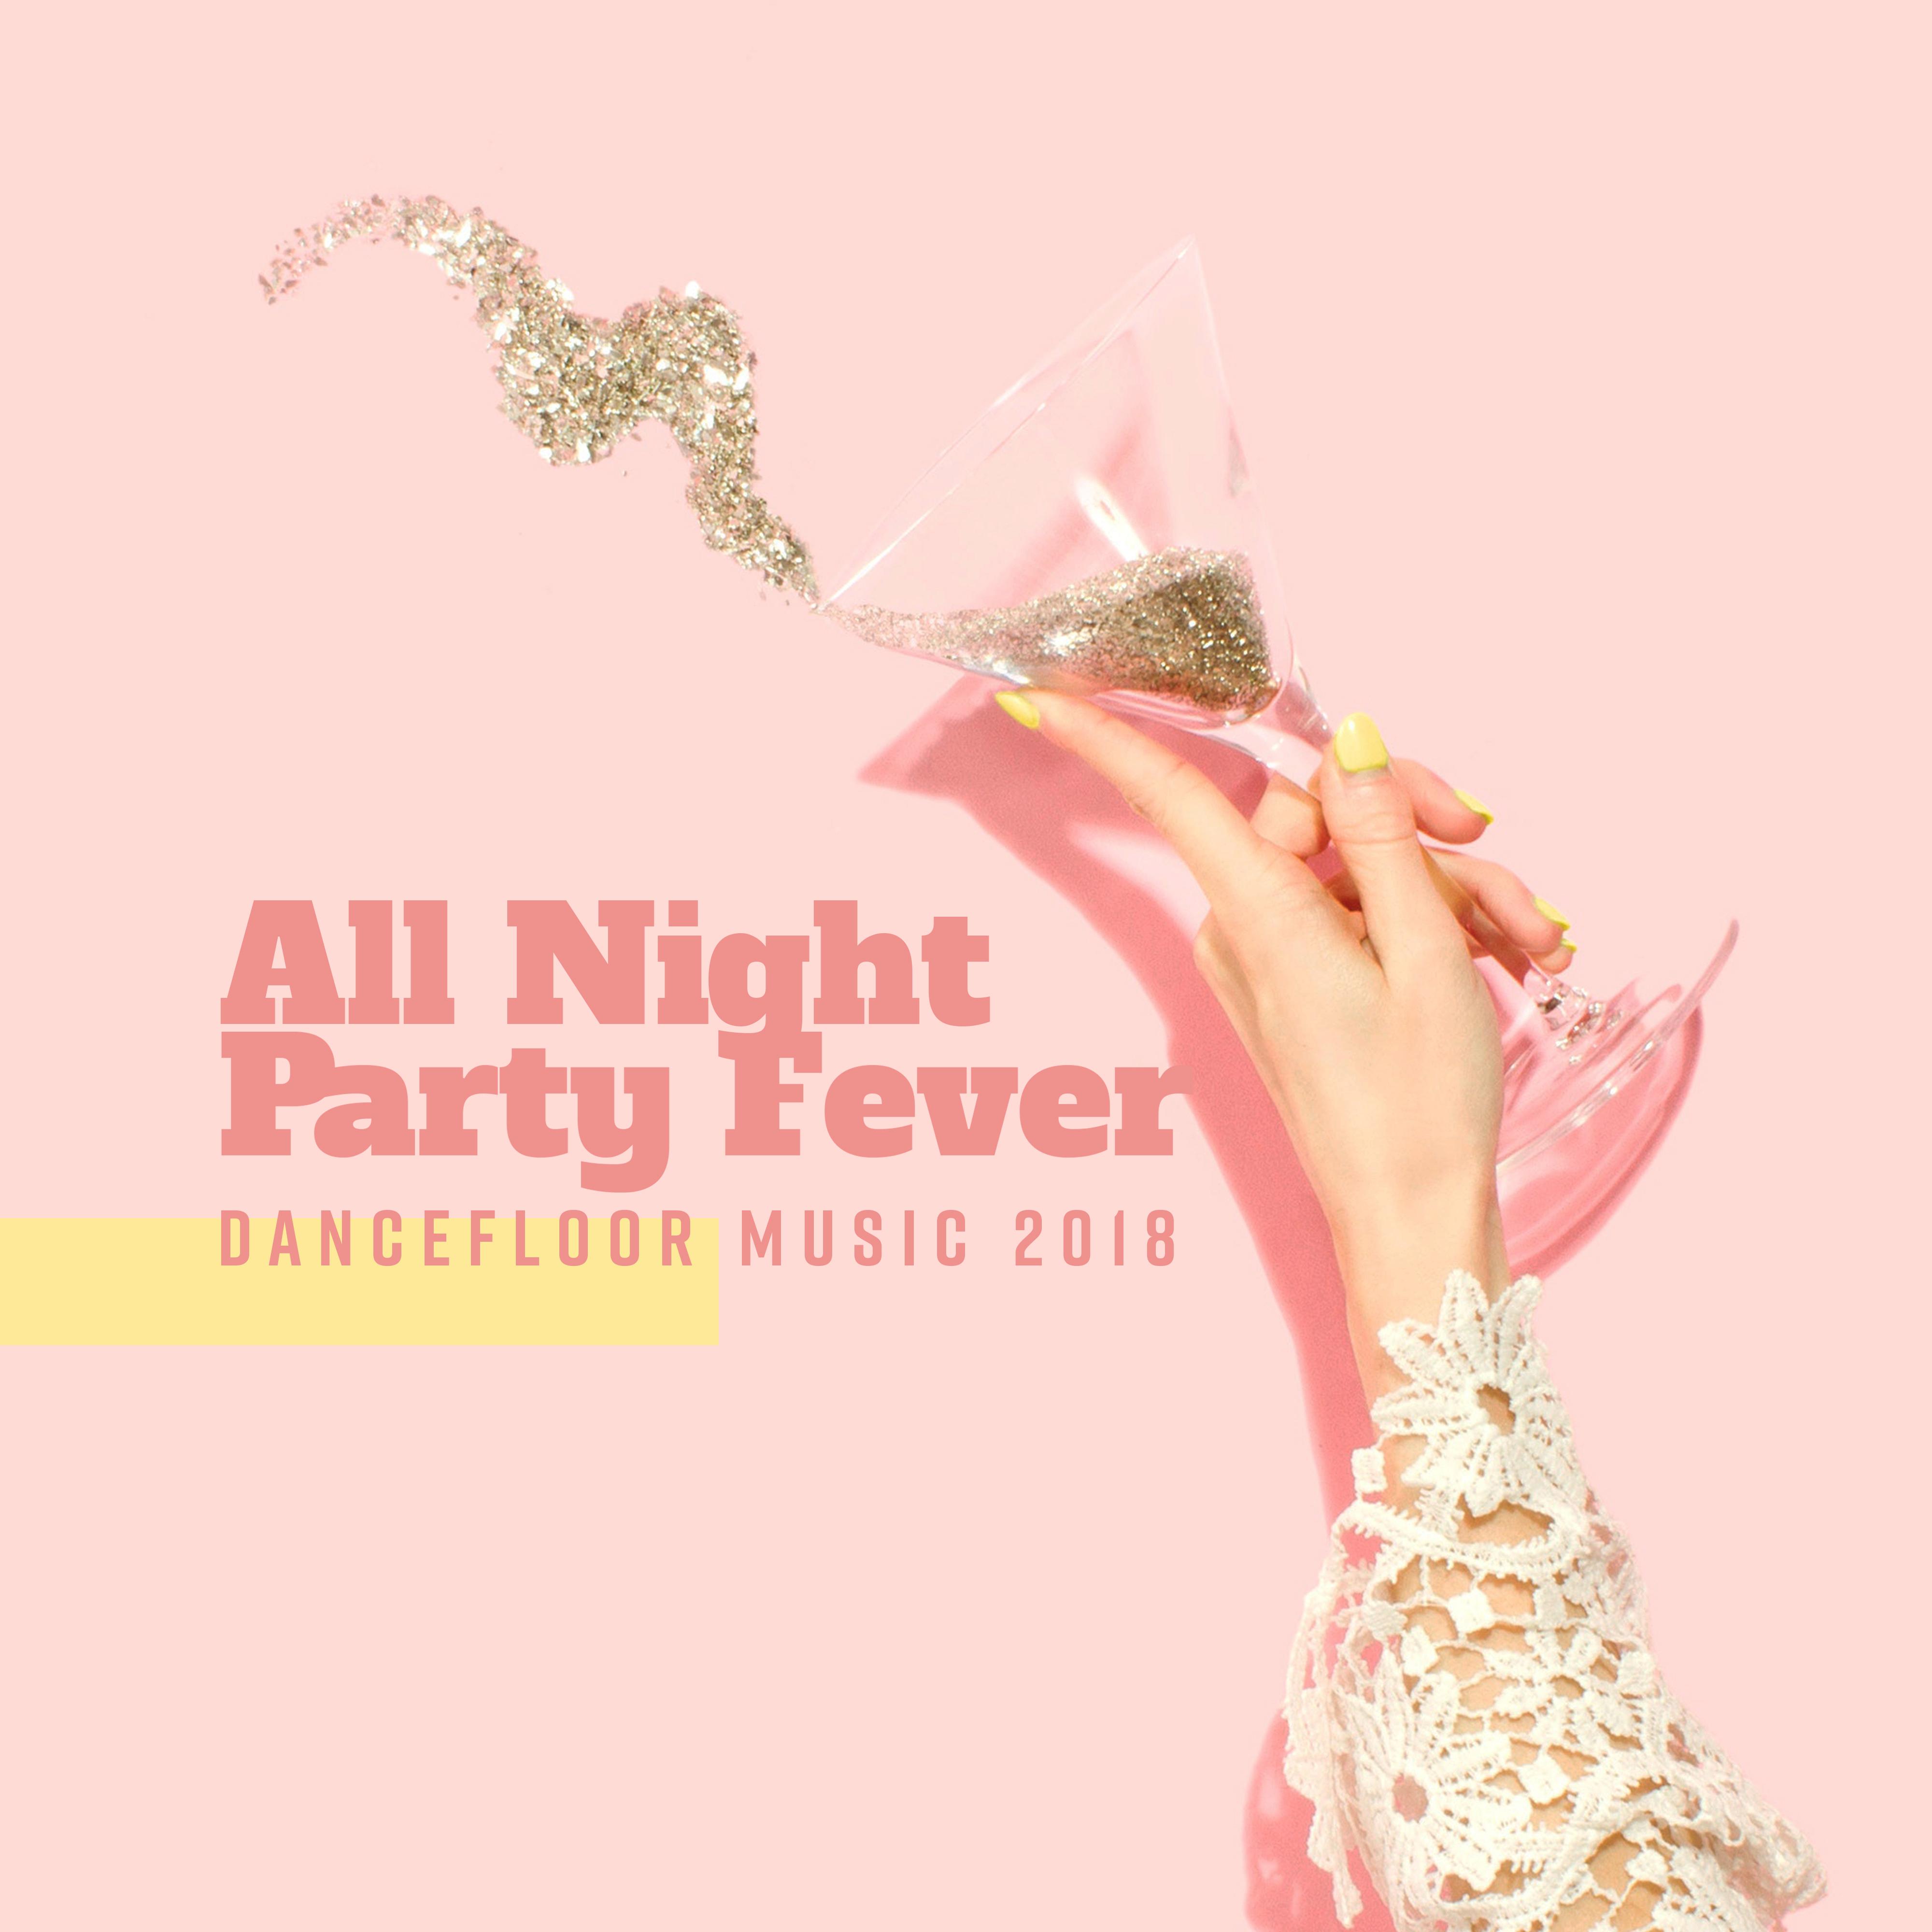 All Night Party Fever: Dancefloor Music 2018